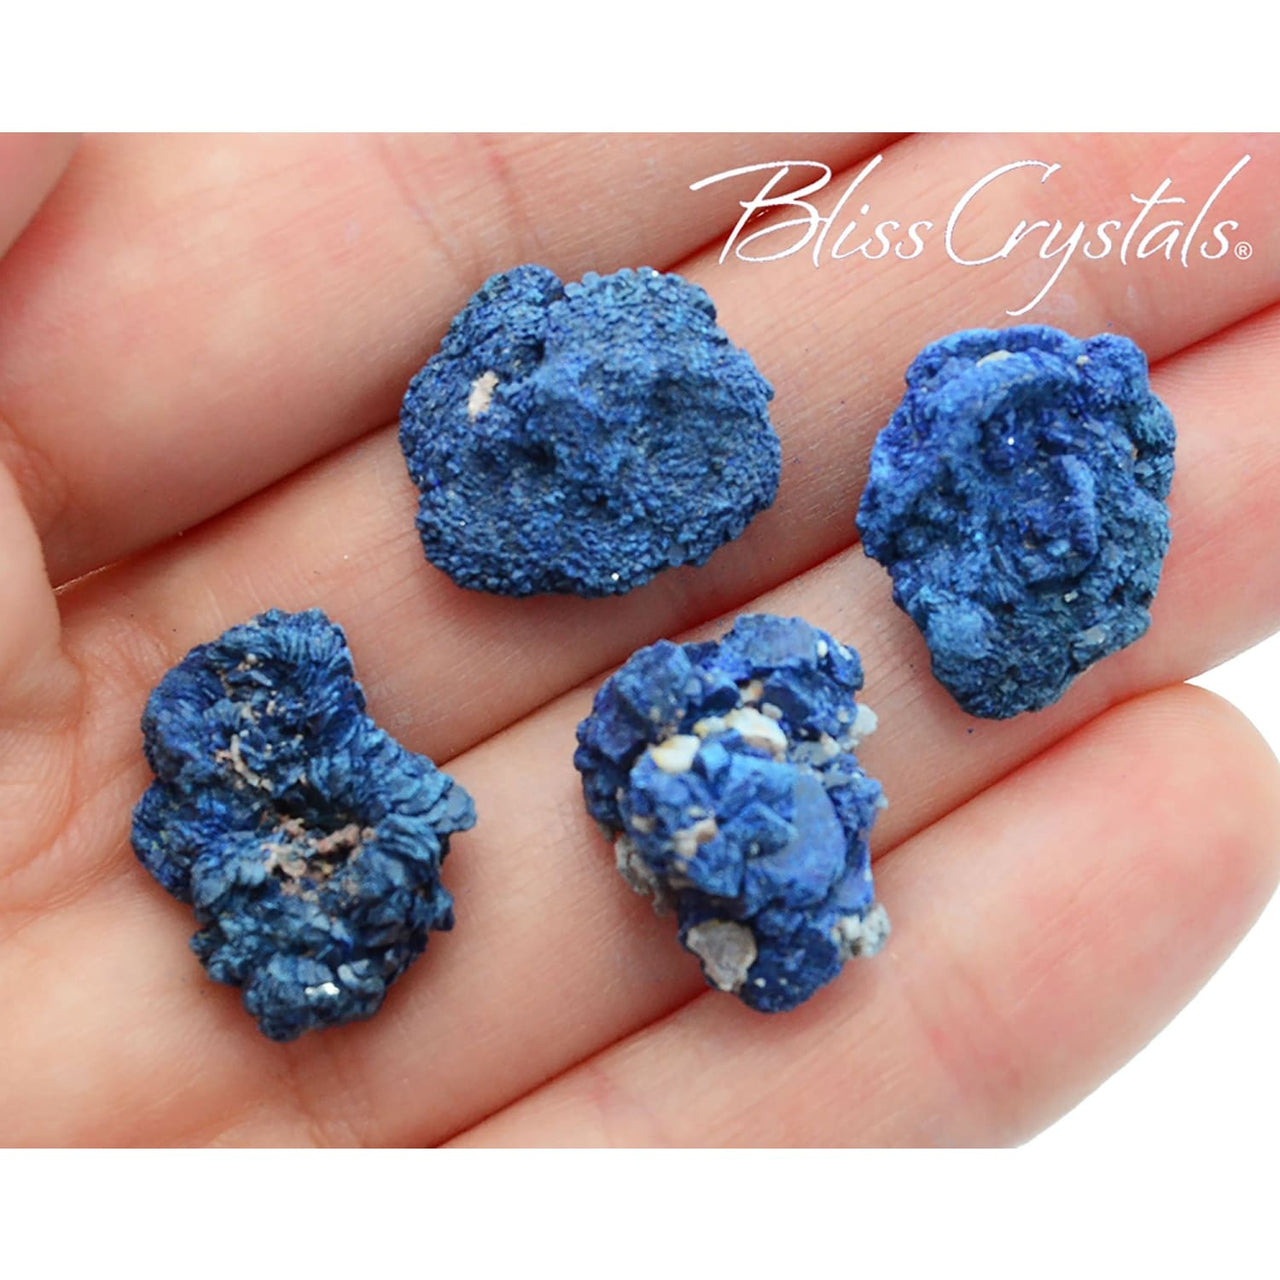 The Blue Azurite Druzy Rough Stones.